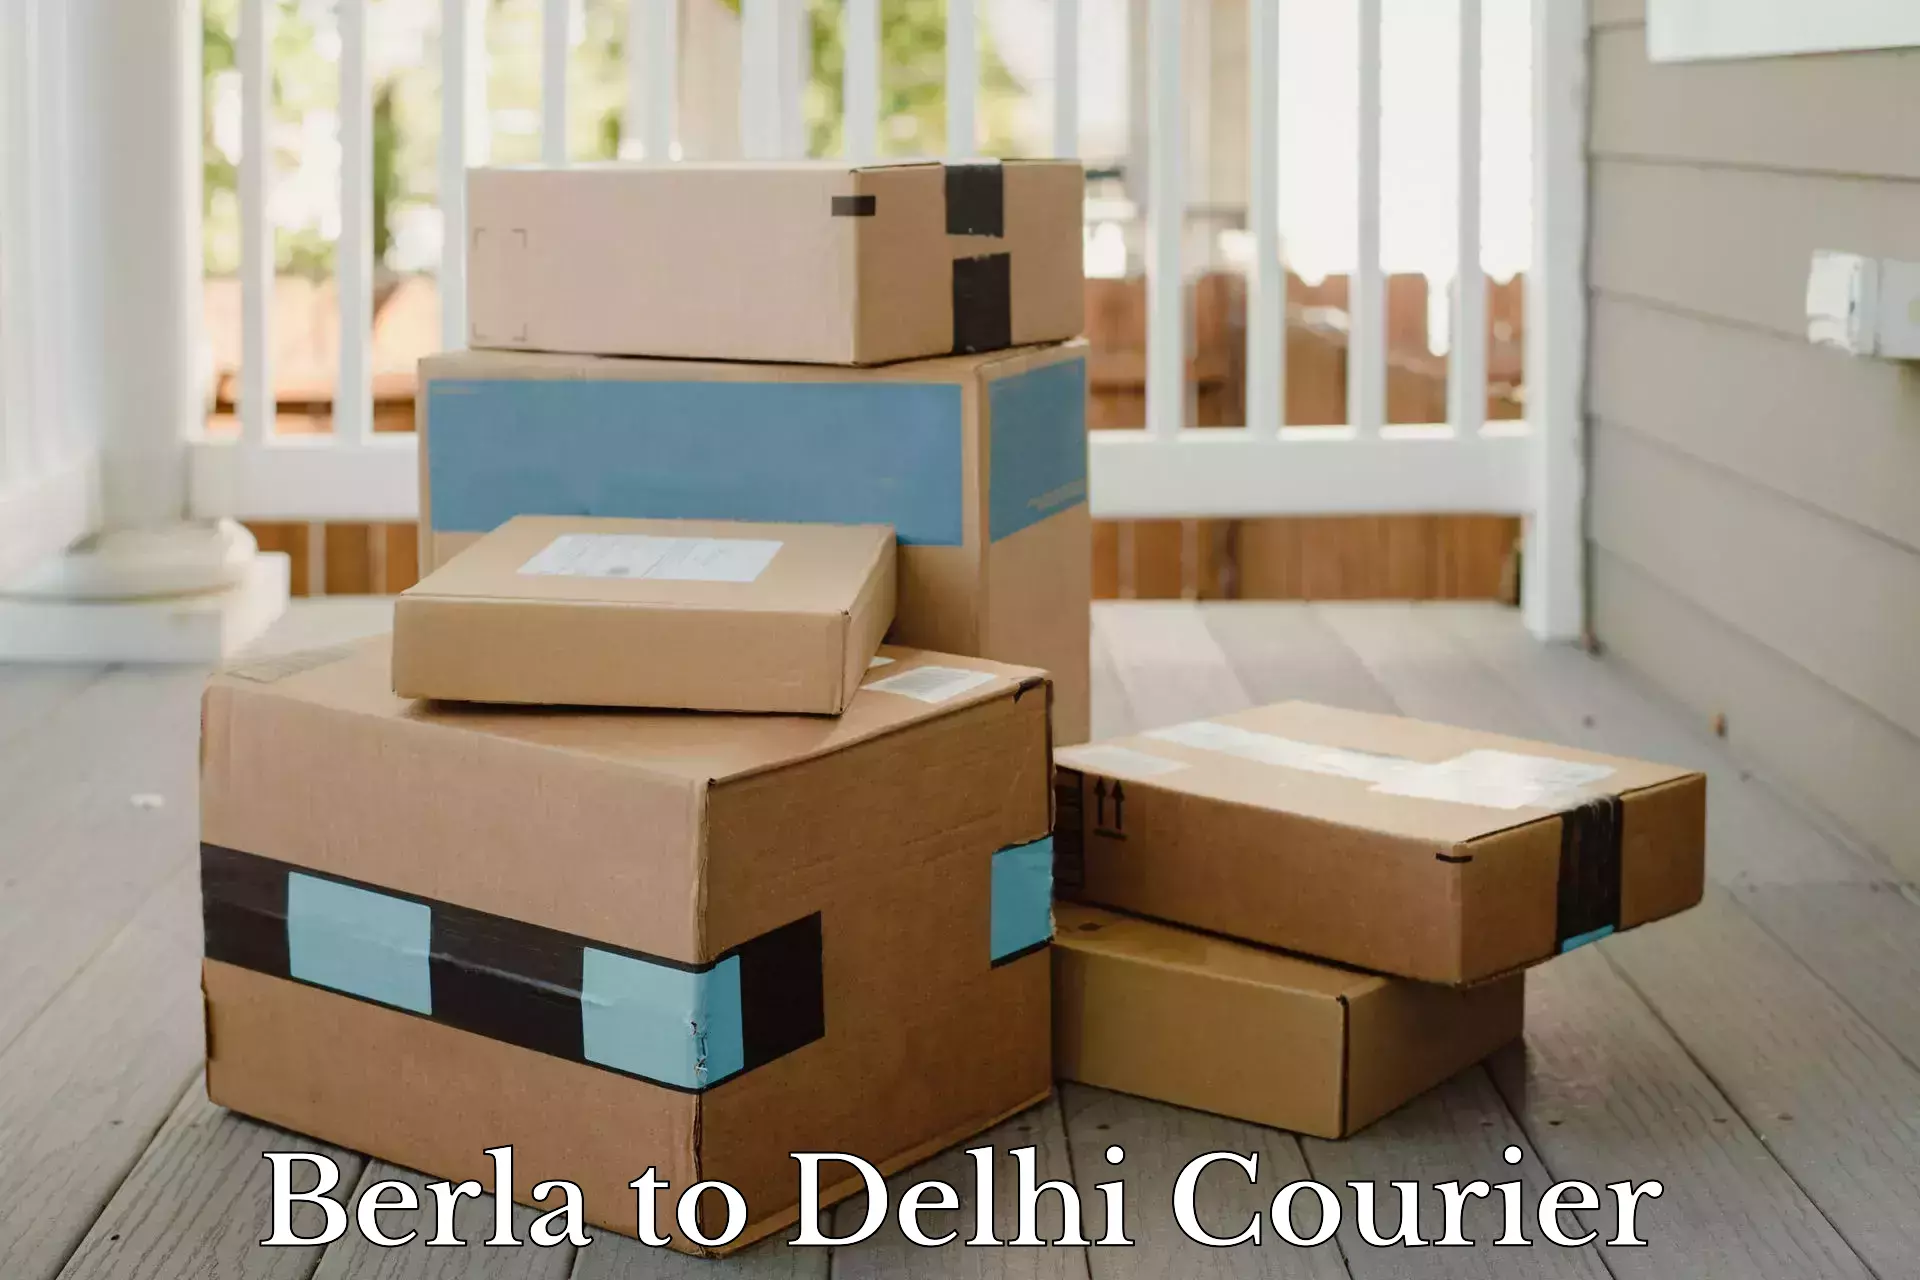 Efficient cargo handling Berla to Delhi